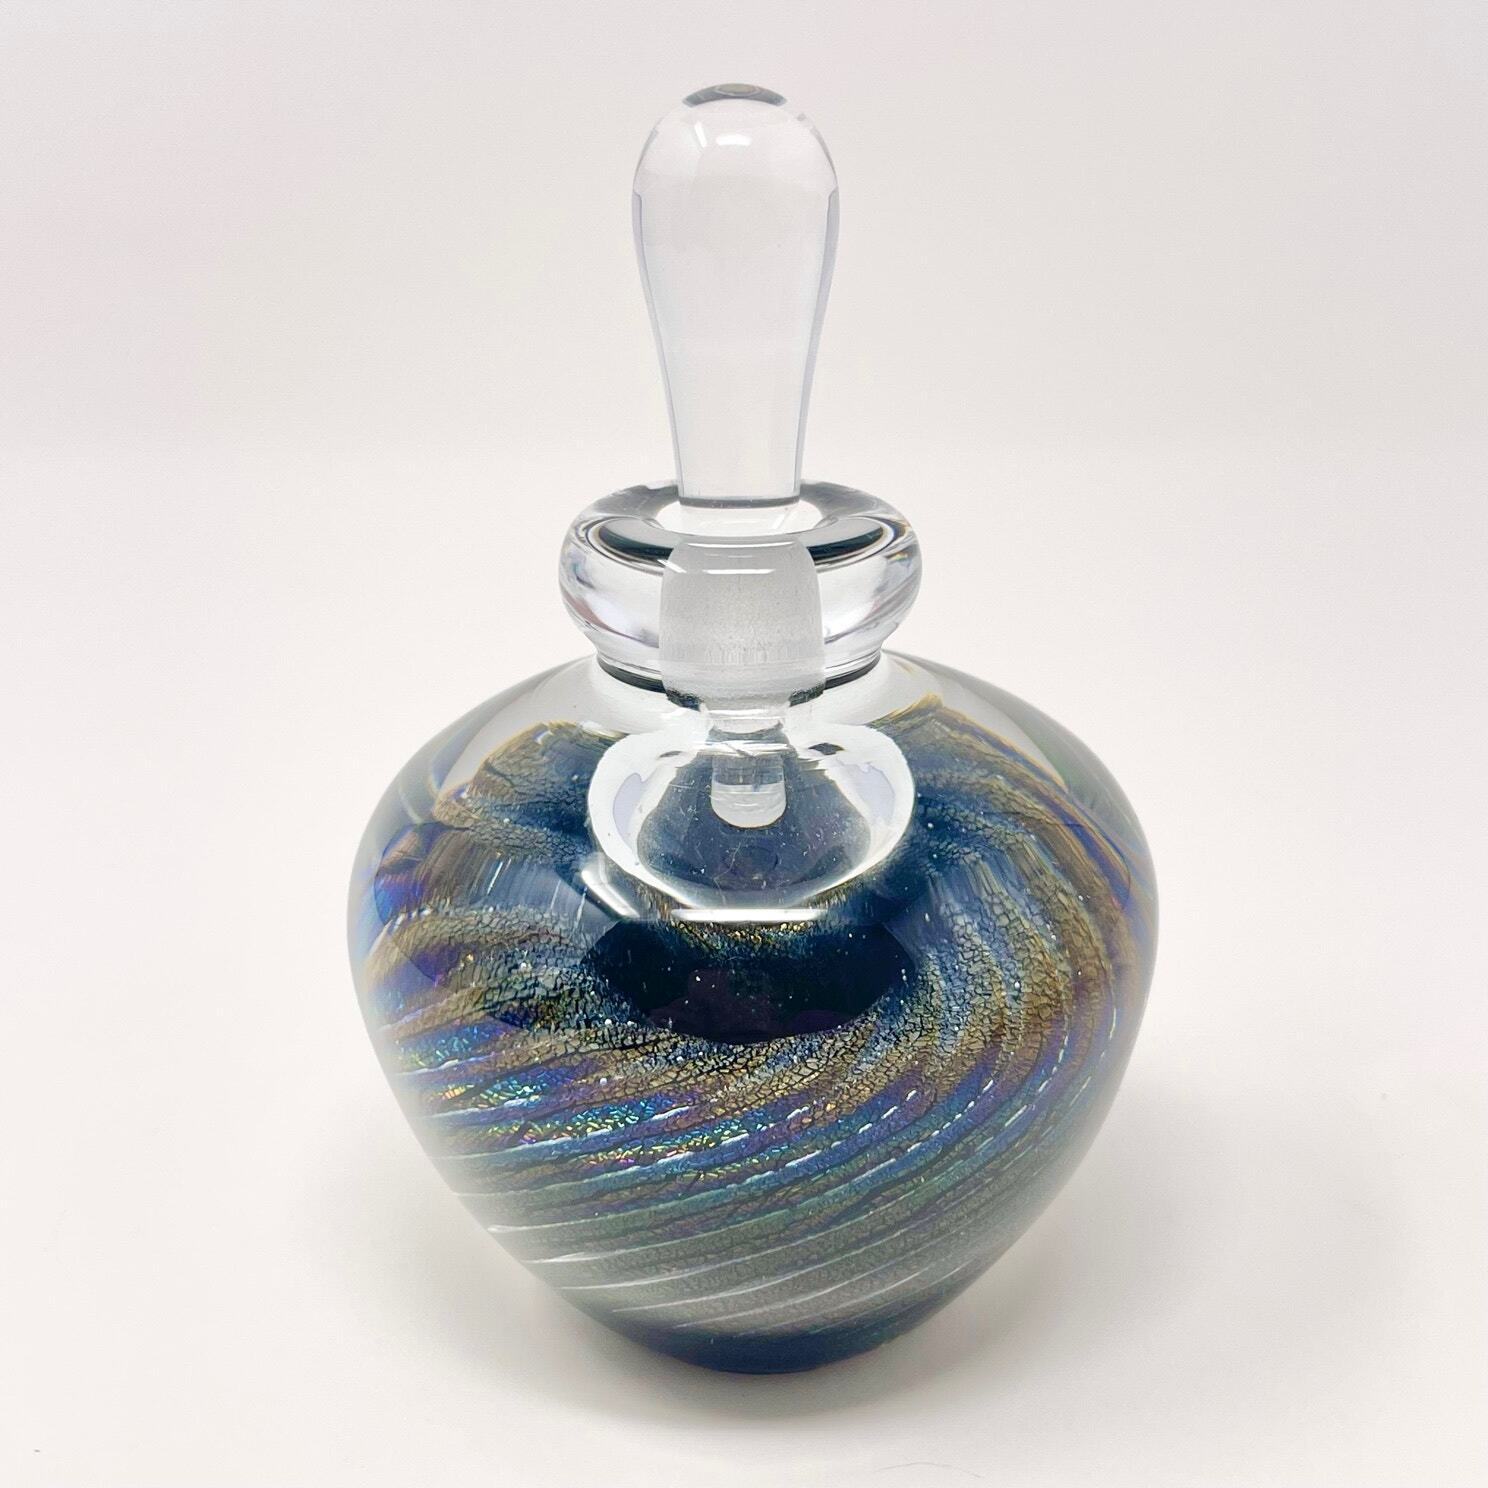 1988 Brian Maytum Studios signed iridescent black swirl art glass perfume bottle